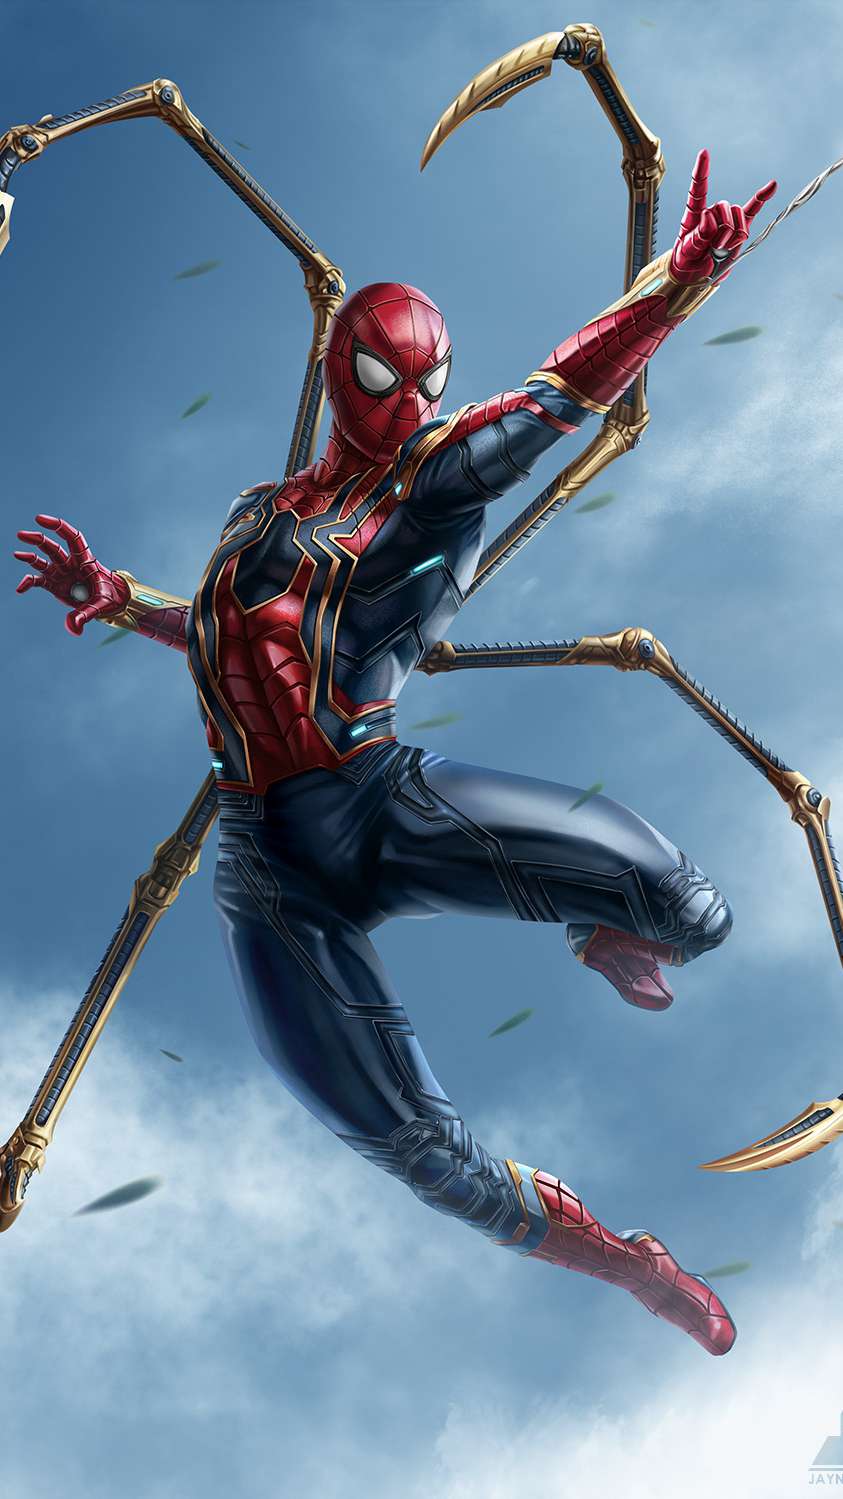 Avengers Endgame Spiderman Action IPhone Wallpaper - IPhone Wallpapers :  iPhone Wallpapers